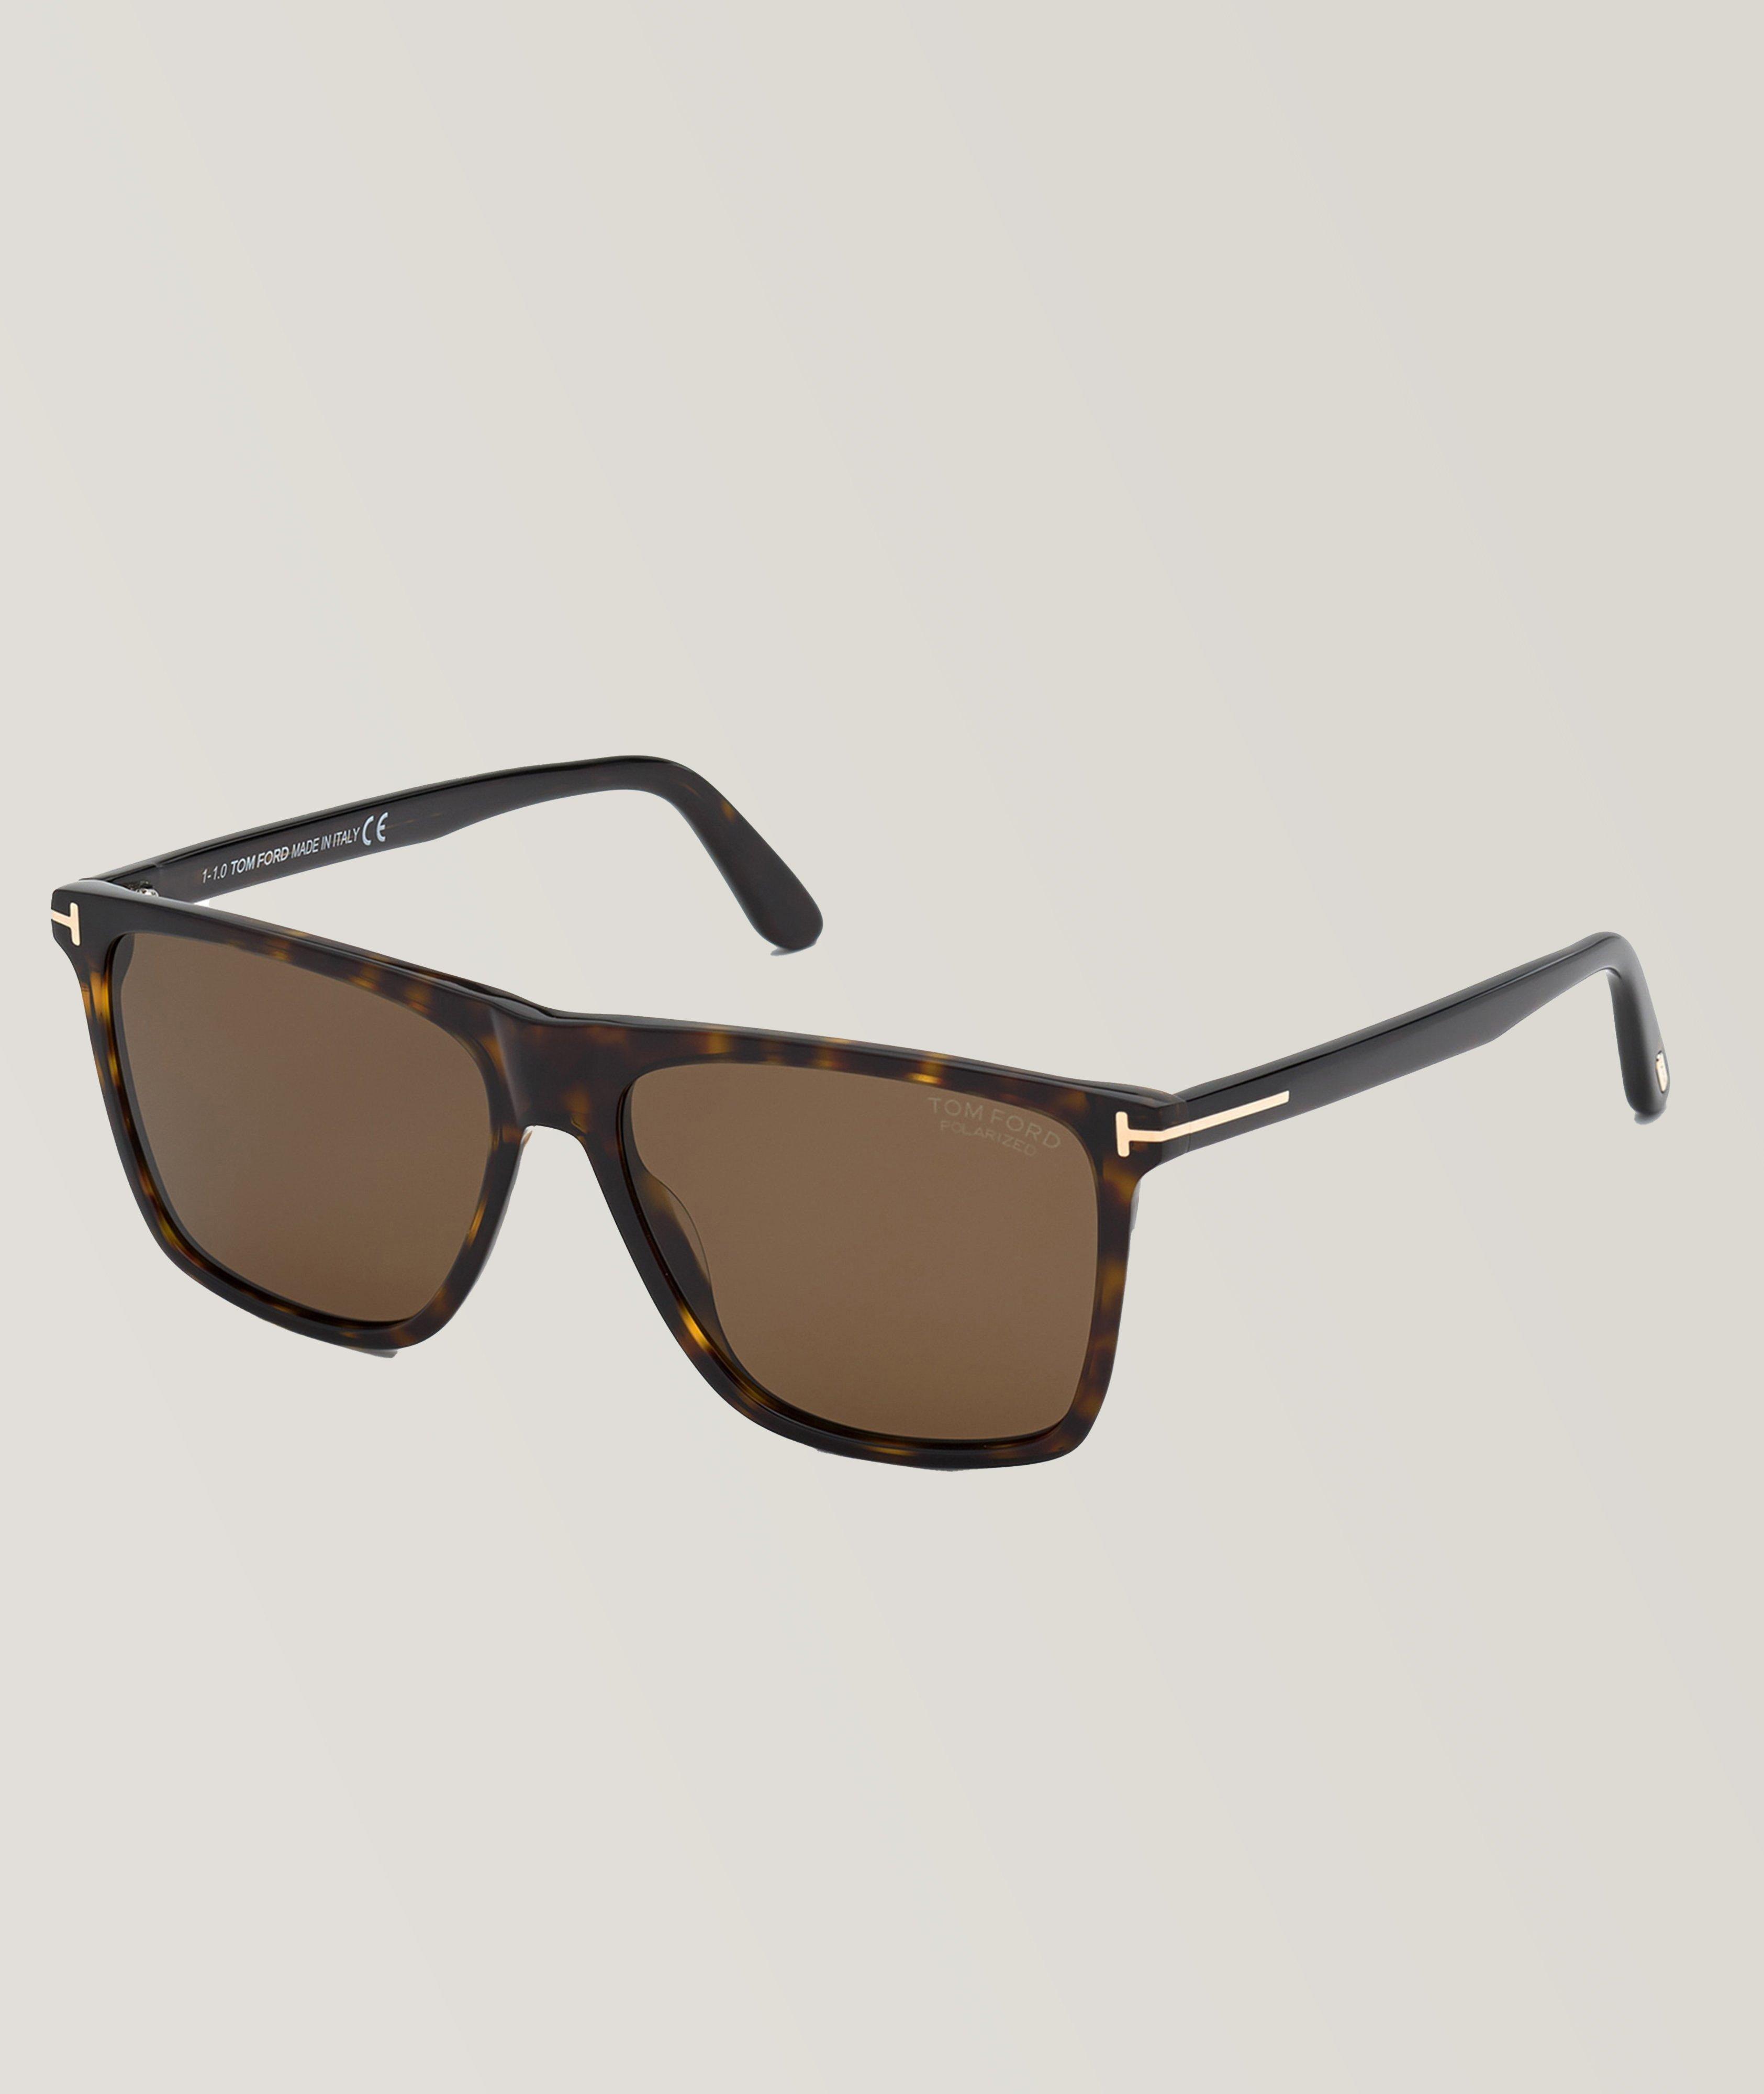 Fletcher Vintage-Style Square Frame Sunglasses image 0